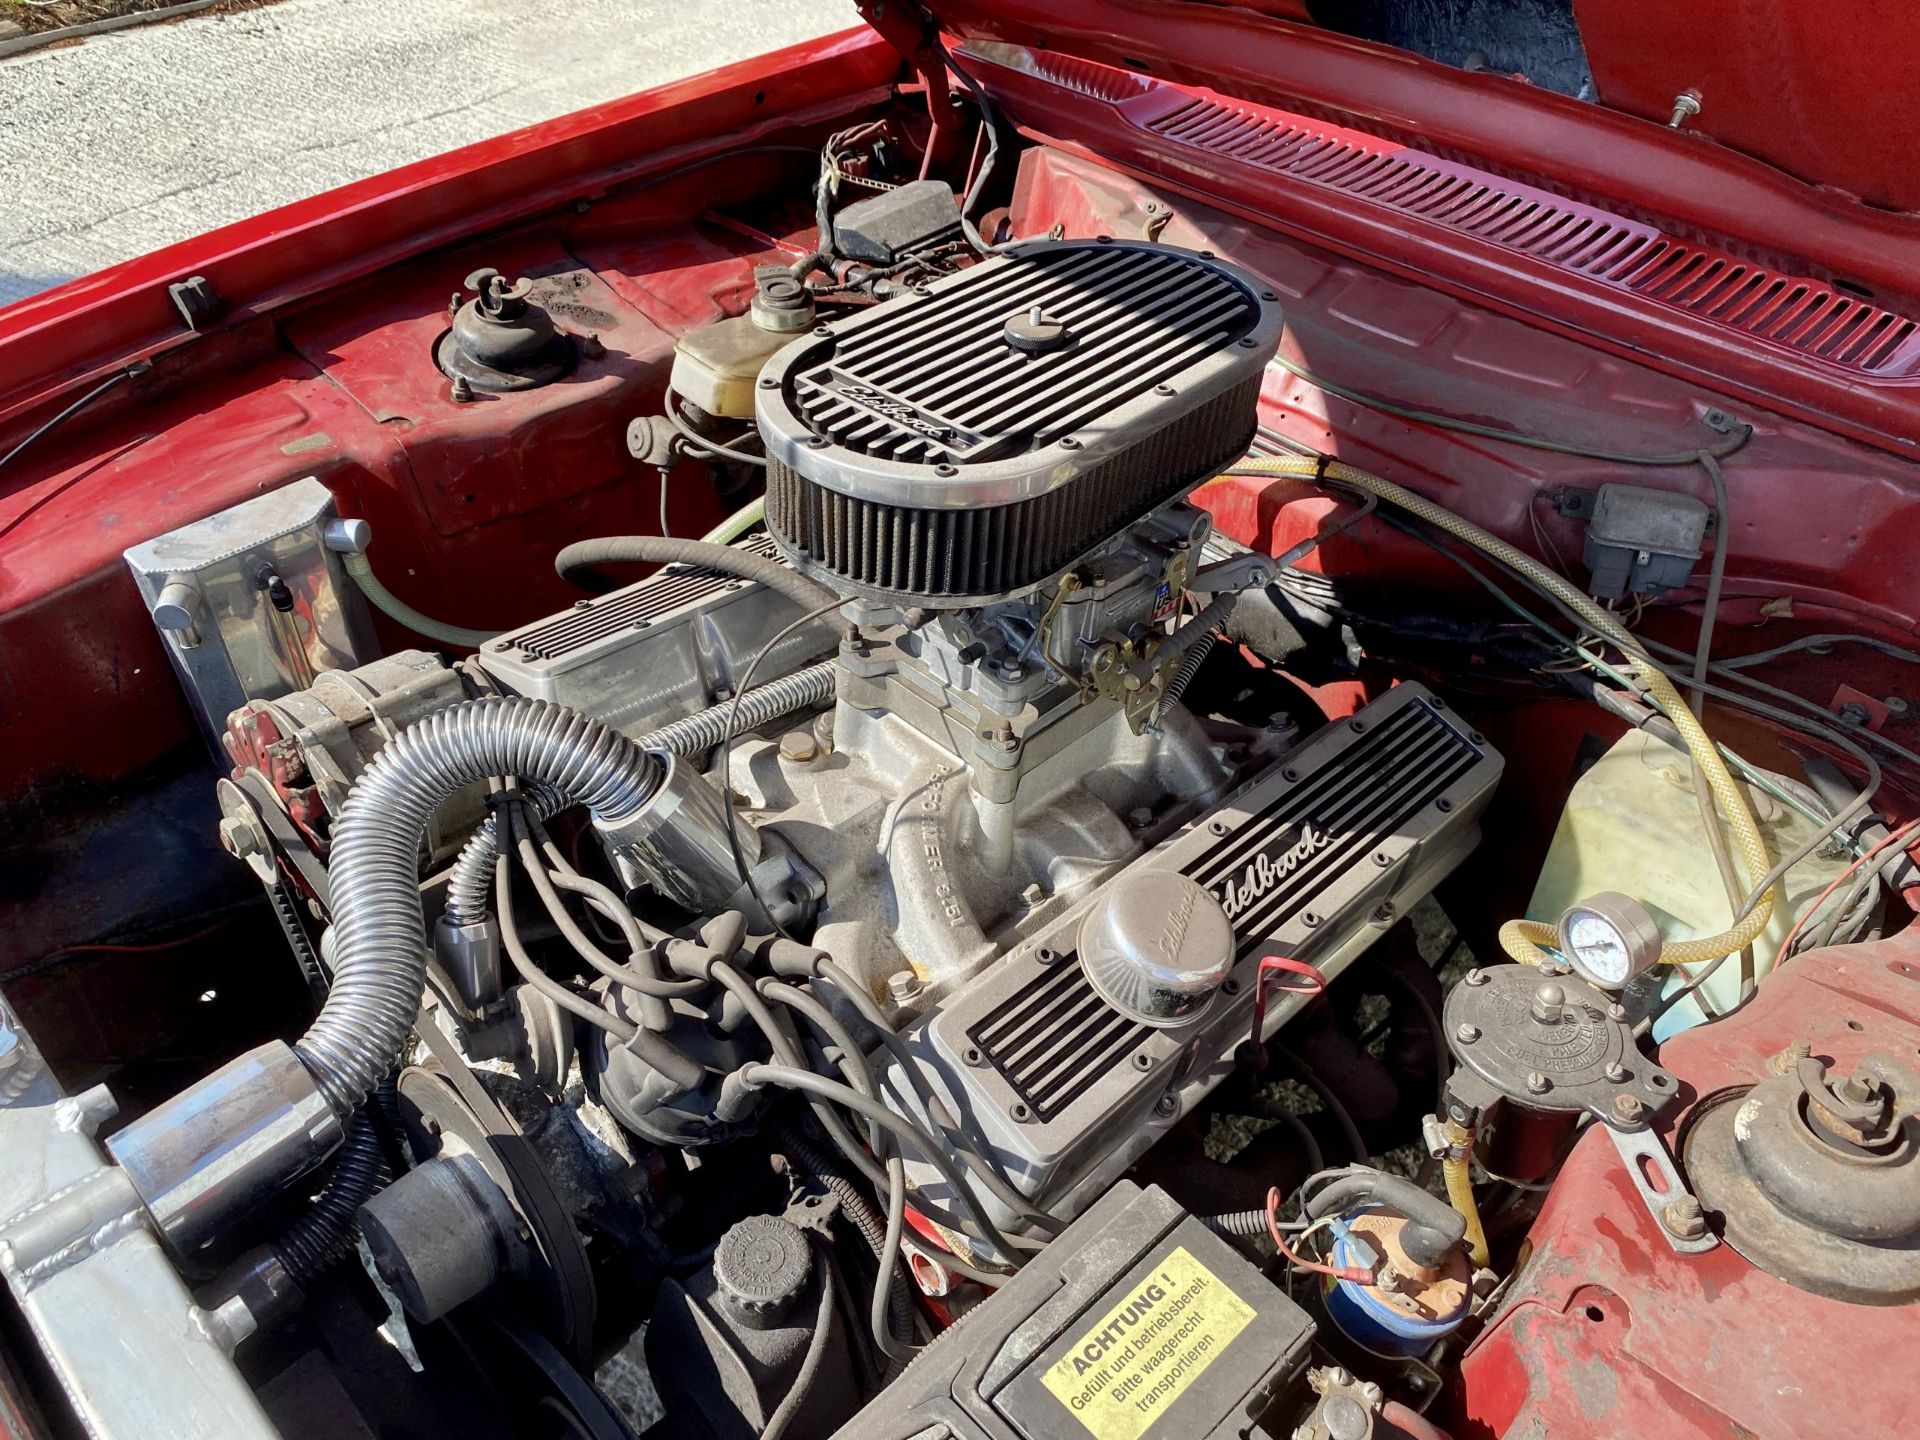 Ford Capri V8 - Image 45 of 50